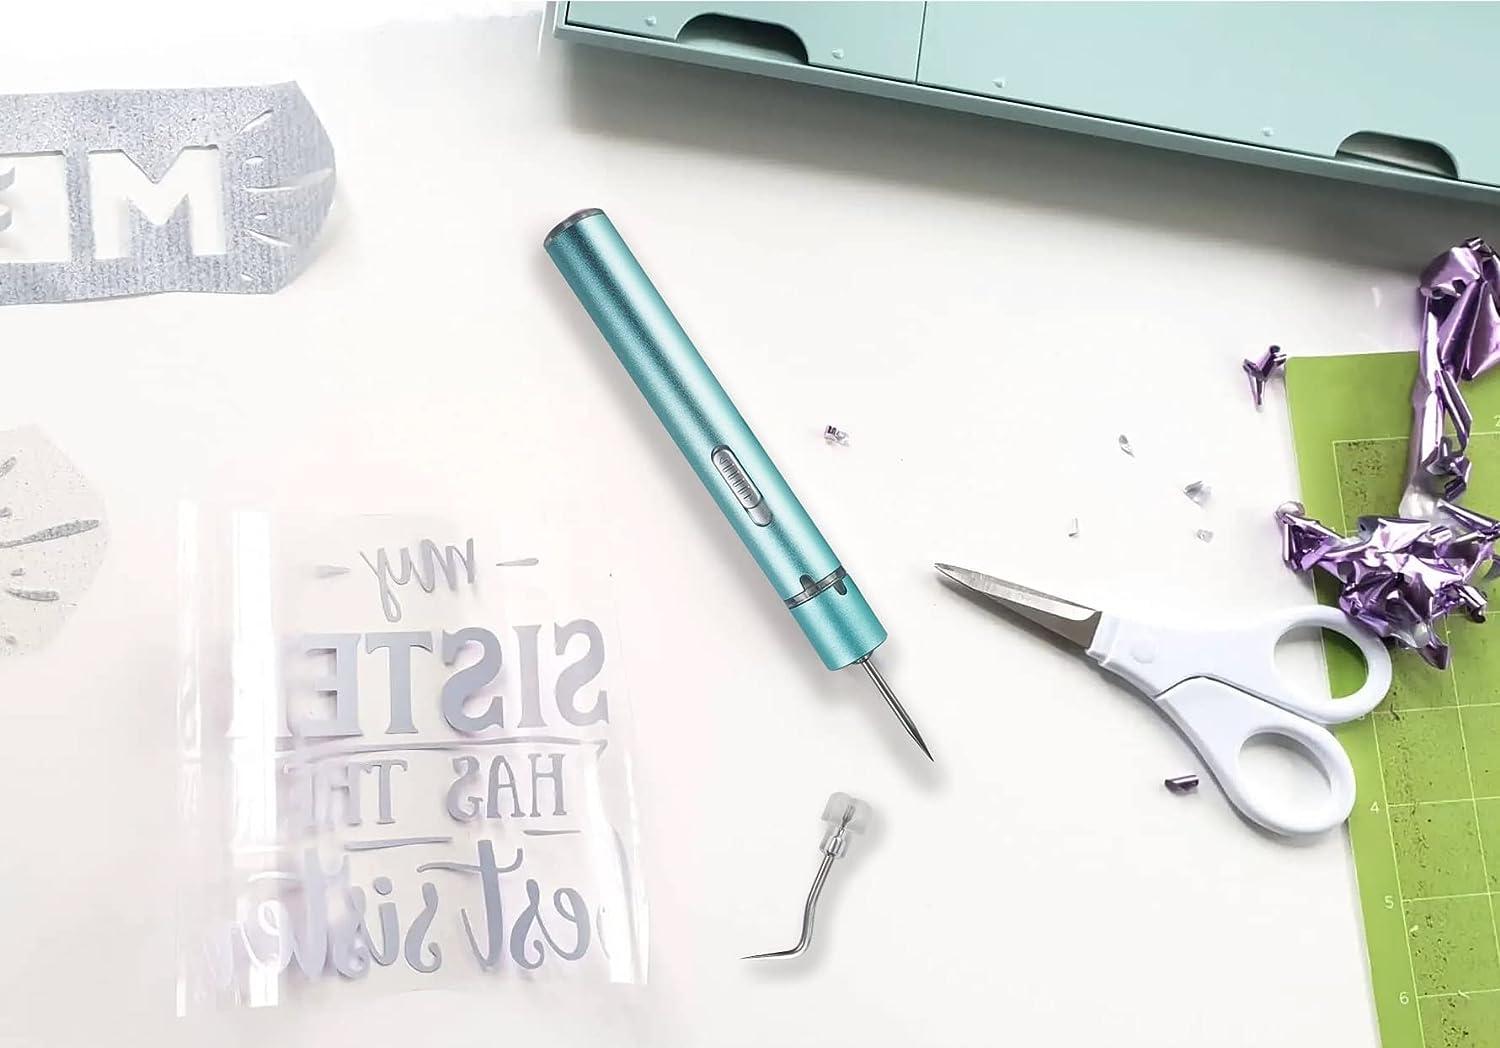 LED Weeding Tool Craft Weeding Hook Pen With Light Ergonomic Paper